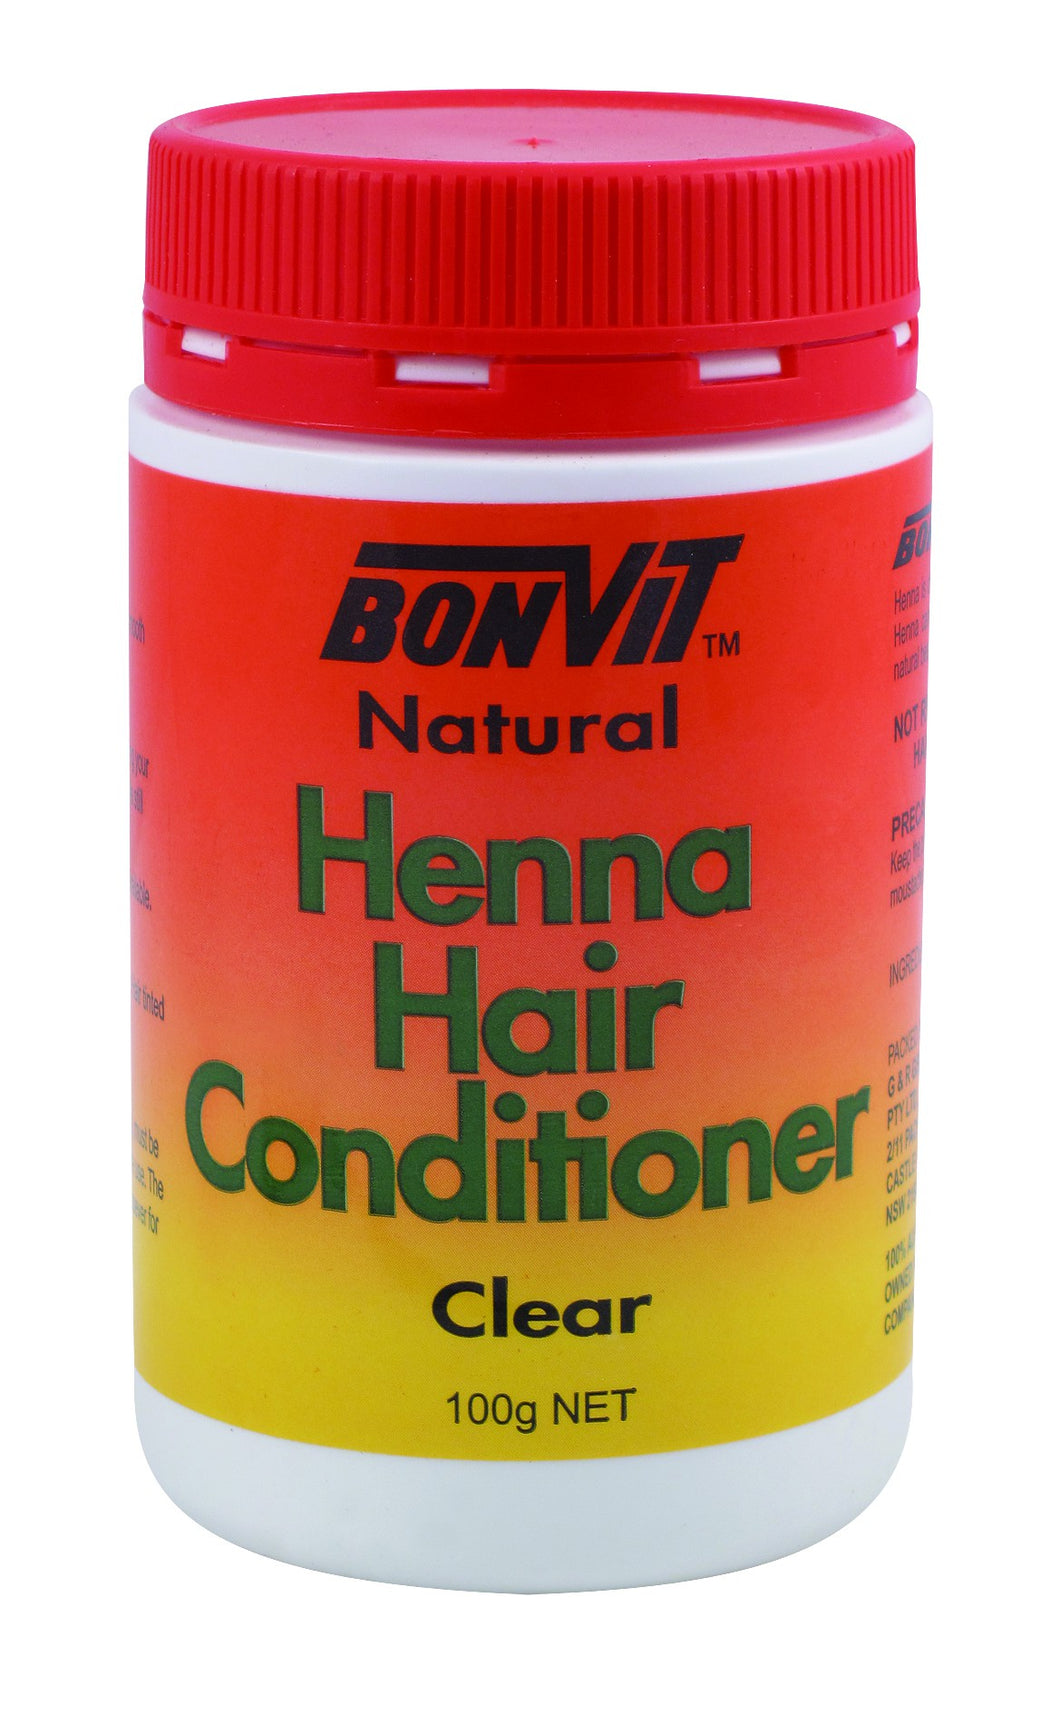 BonVit, Natural Henna Hair Conditioner, Clear, 100 g - Supplement